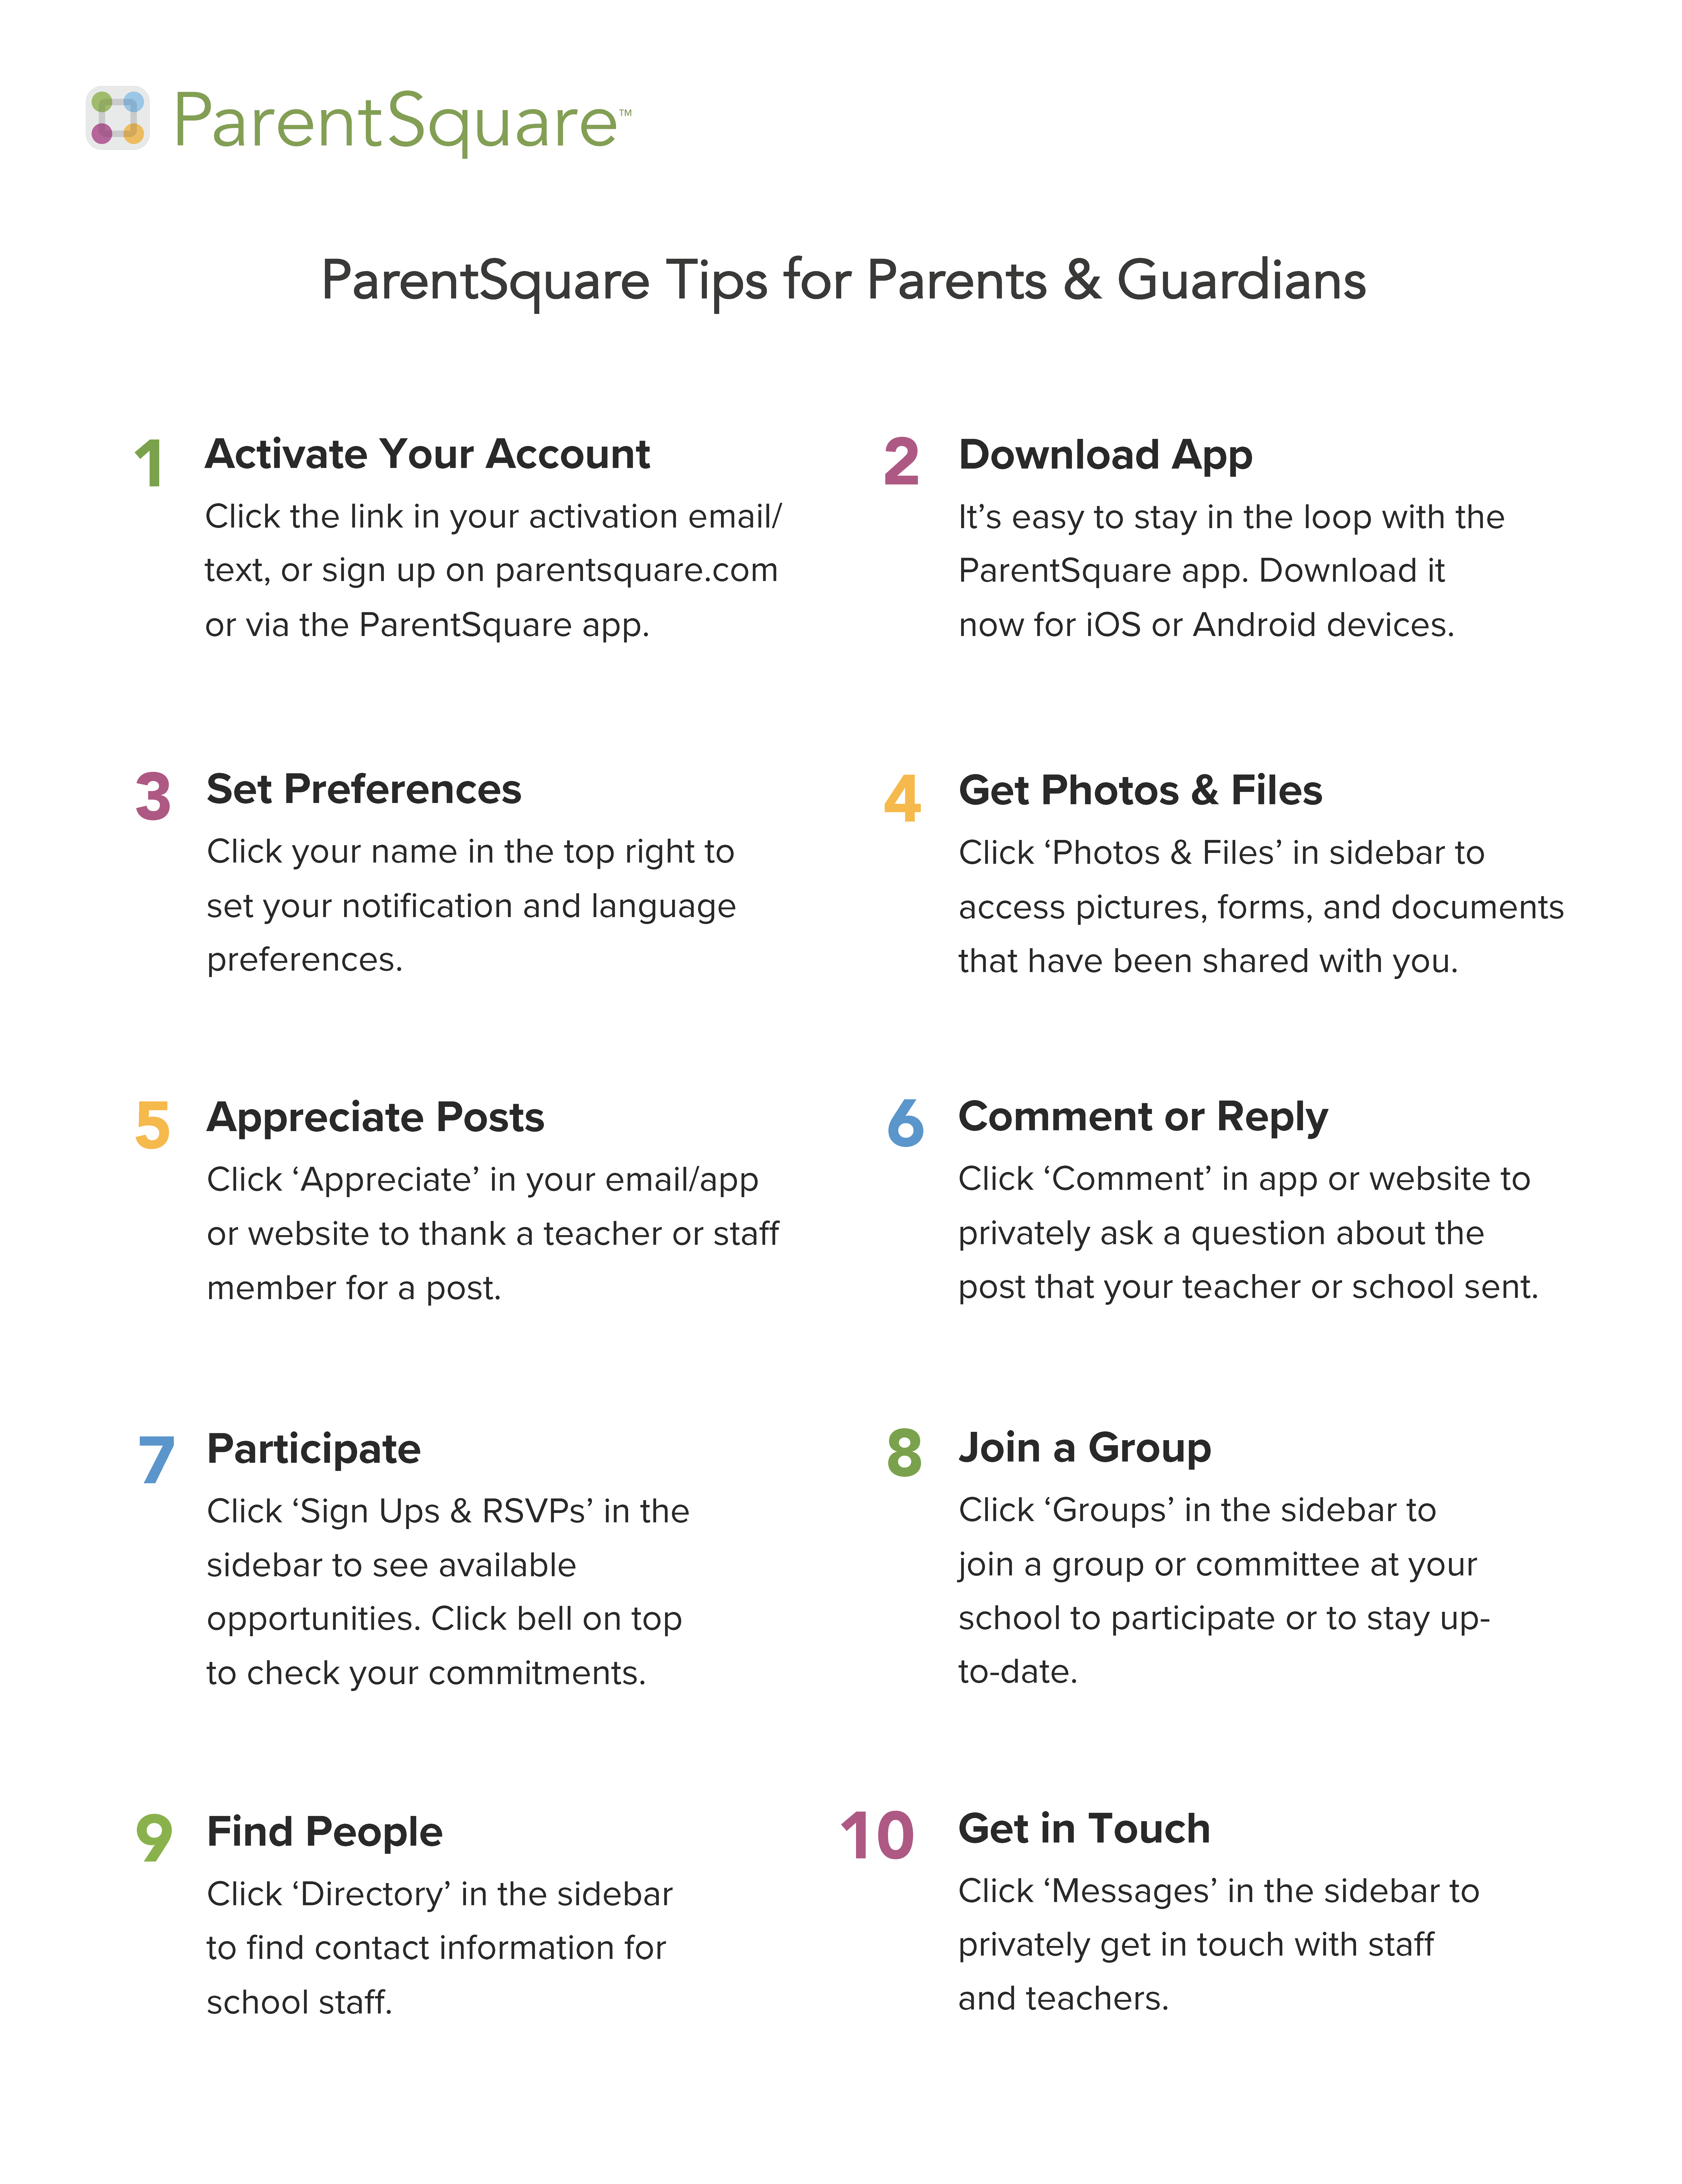 ParentSquare Parent Tips